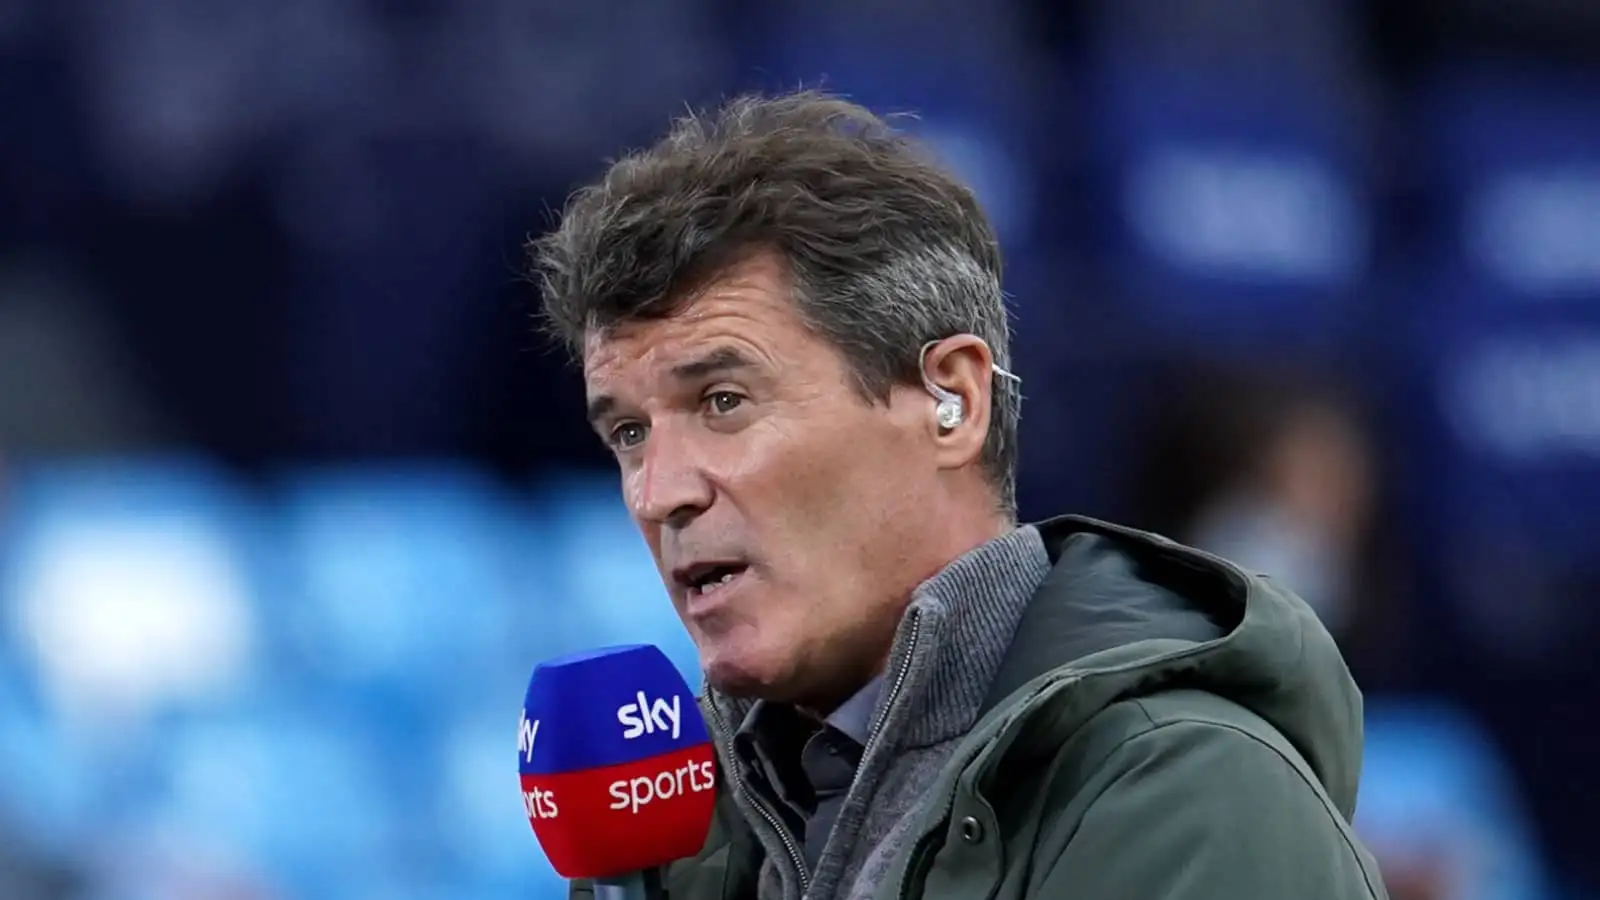 Roy Keane appears on Sky Sports before Man City vs Liverpool in Premier League